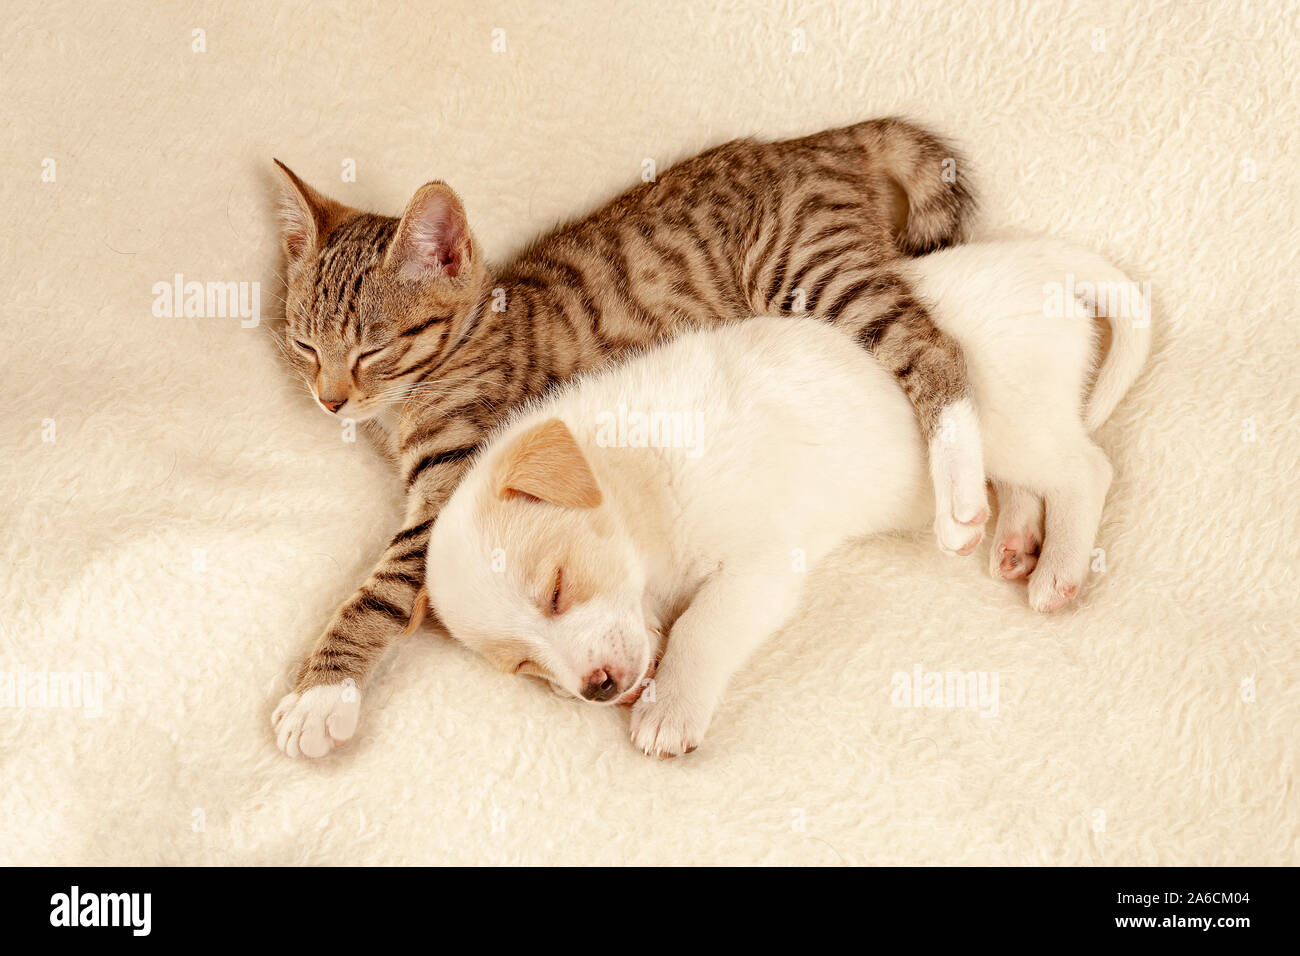 junges Kätzchen und junger Hund schlafen friedlich nebeneinander | Portrait of a young kitten and a young pup peacefully asleep beside each other. Stock Photo